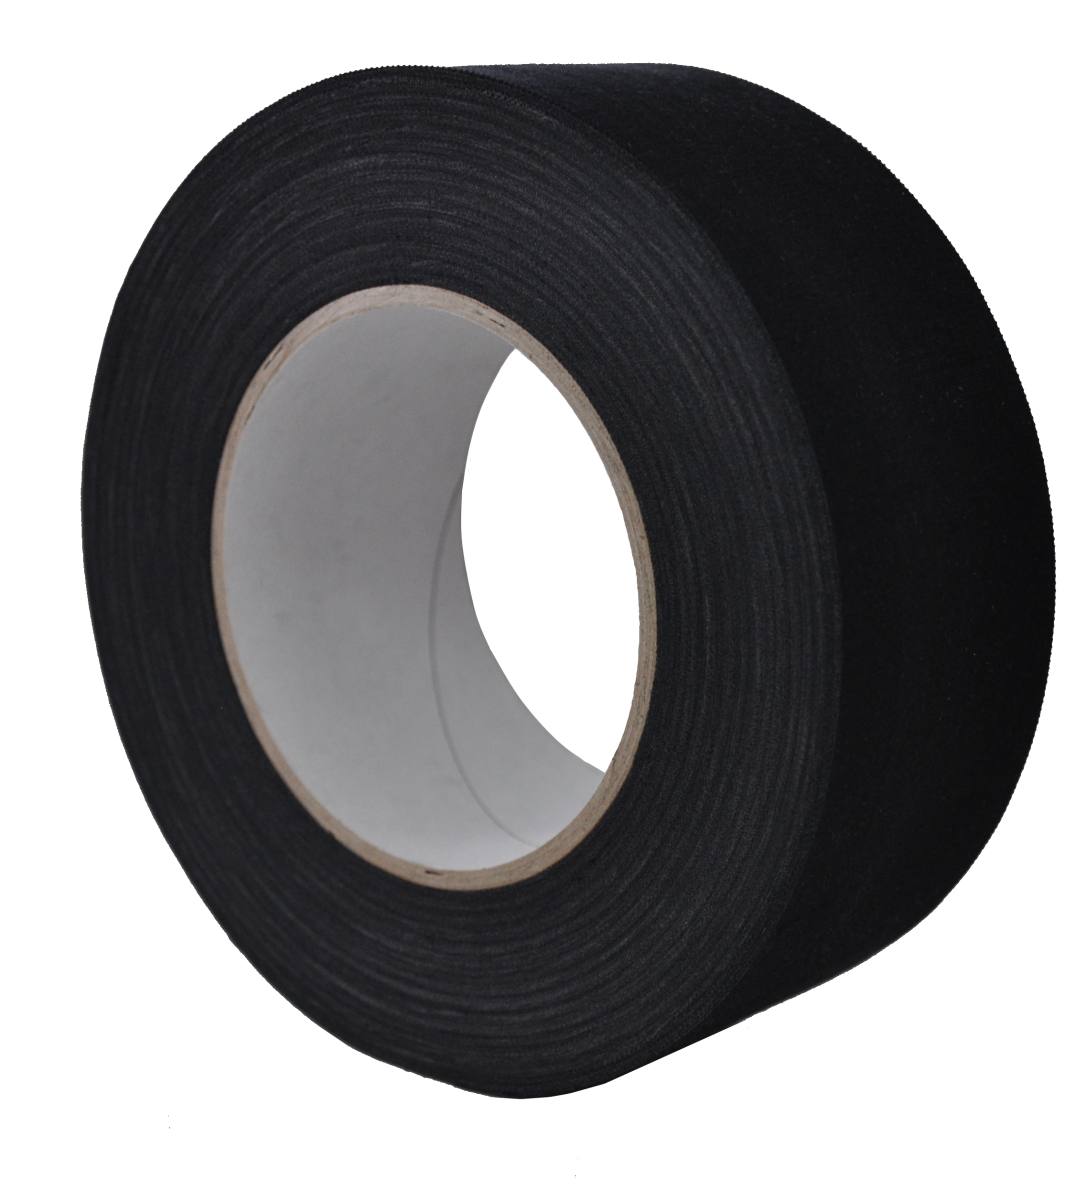 S-K-S 970 Raw fabric adhesive tape, 50 mm x 50 m, black, 0.240 mm